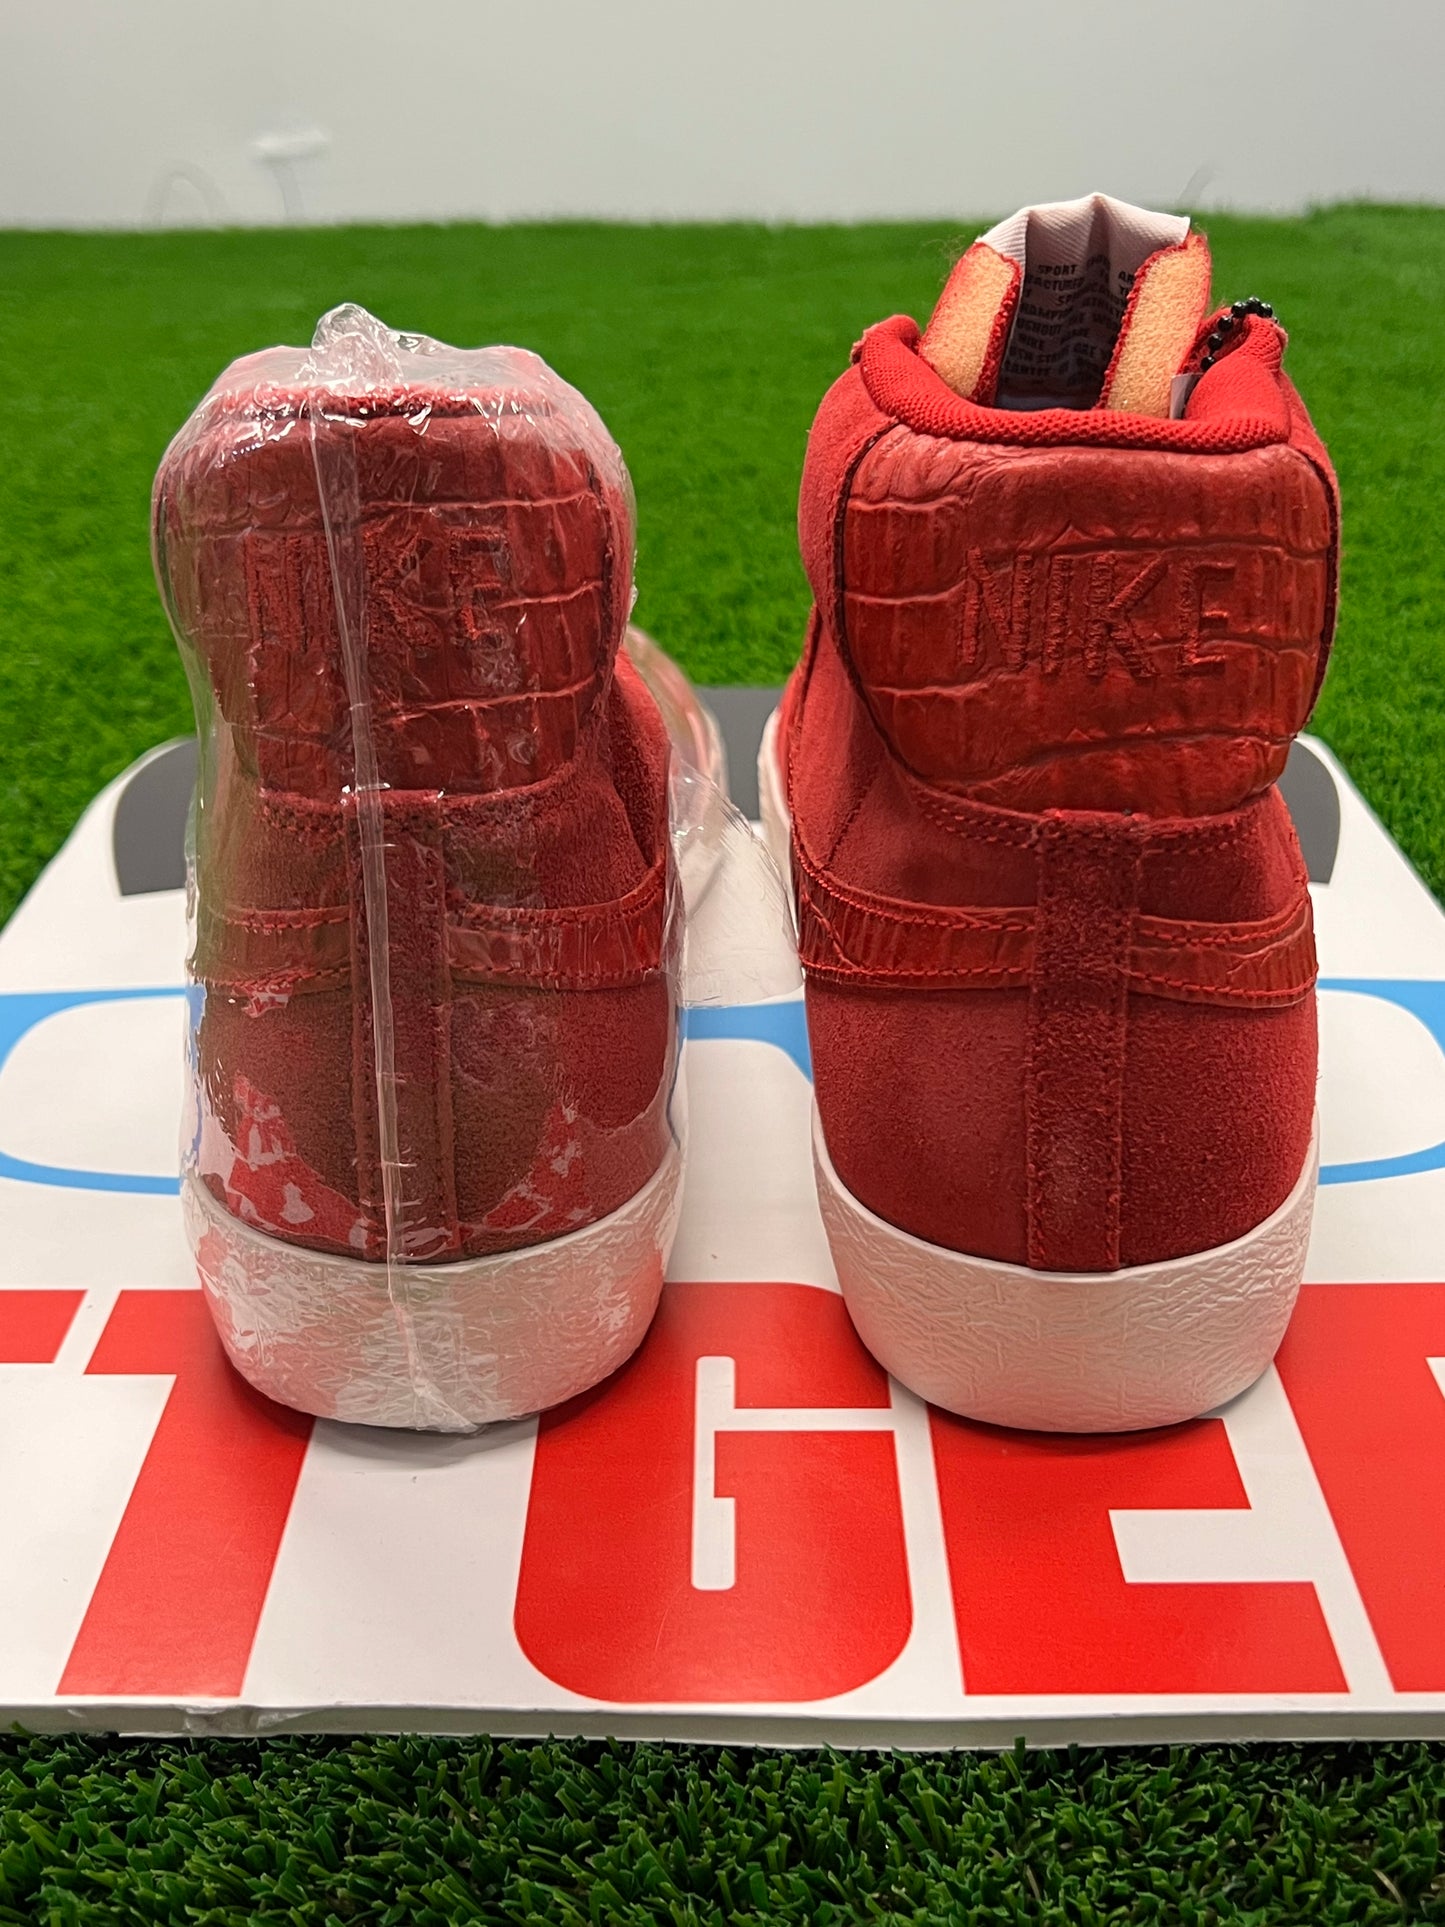 Men’s Nike Blazer Red Suede Brand New